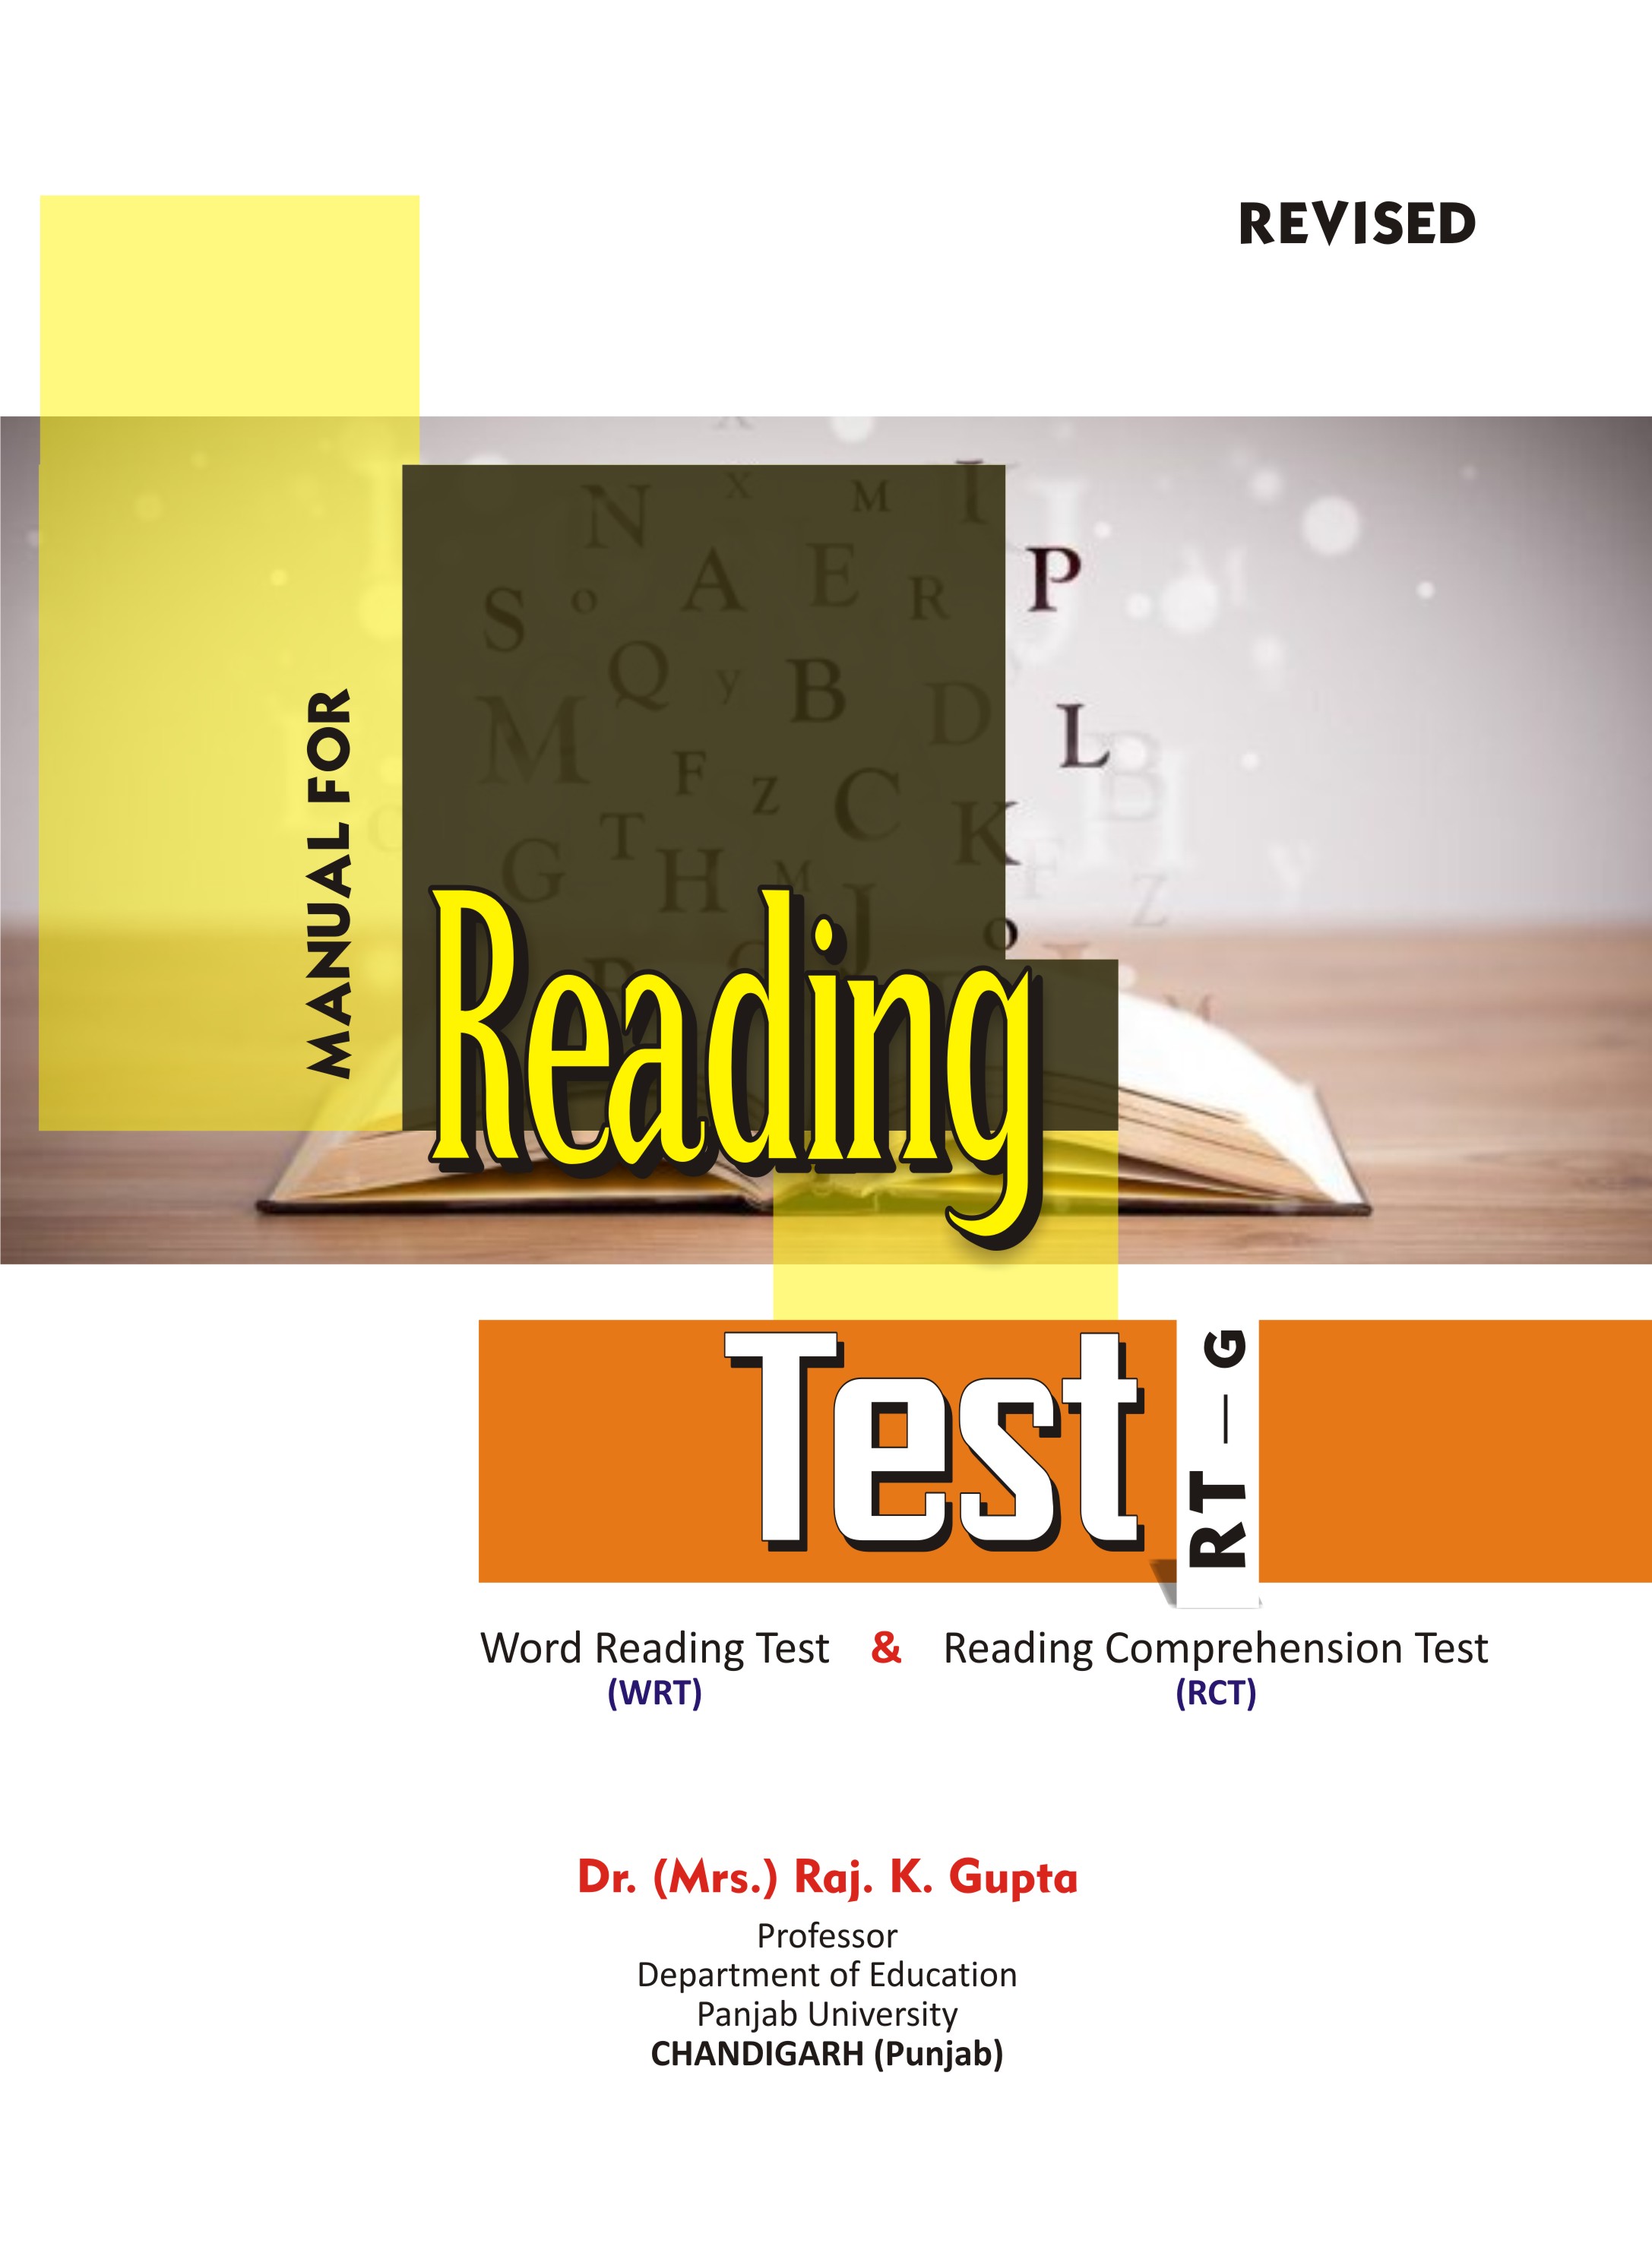 READING-TEST